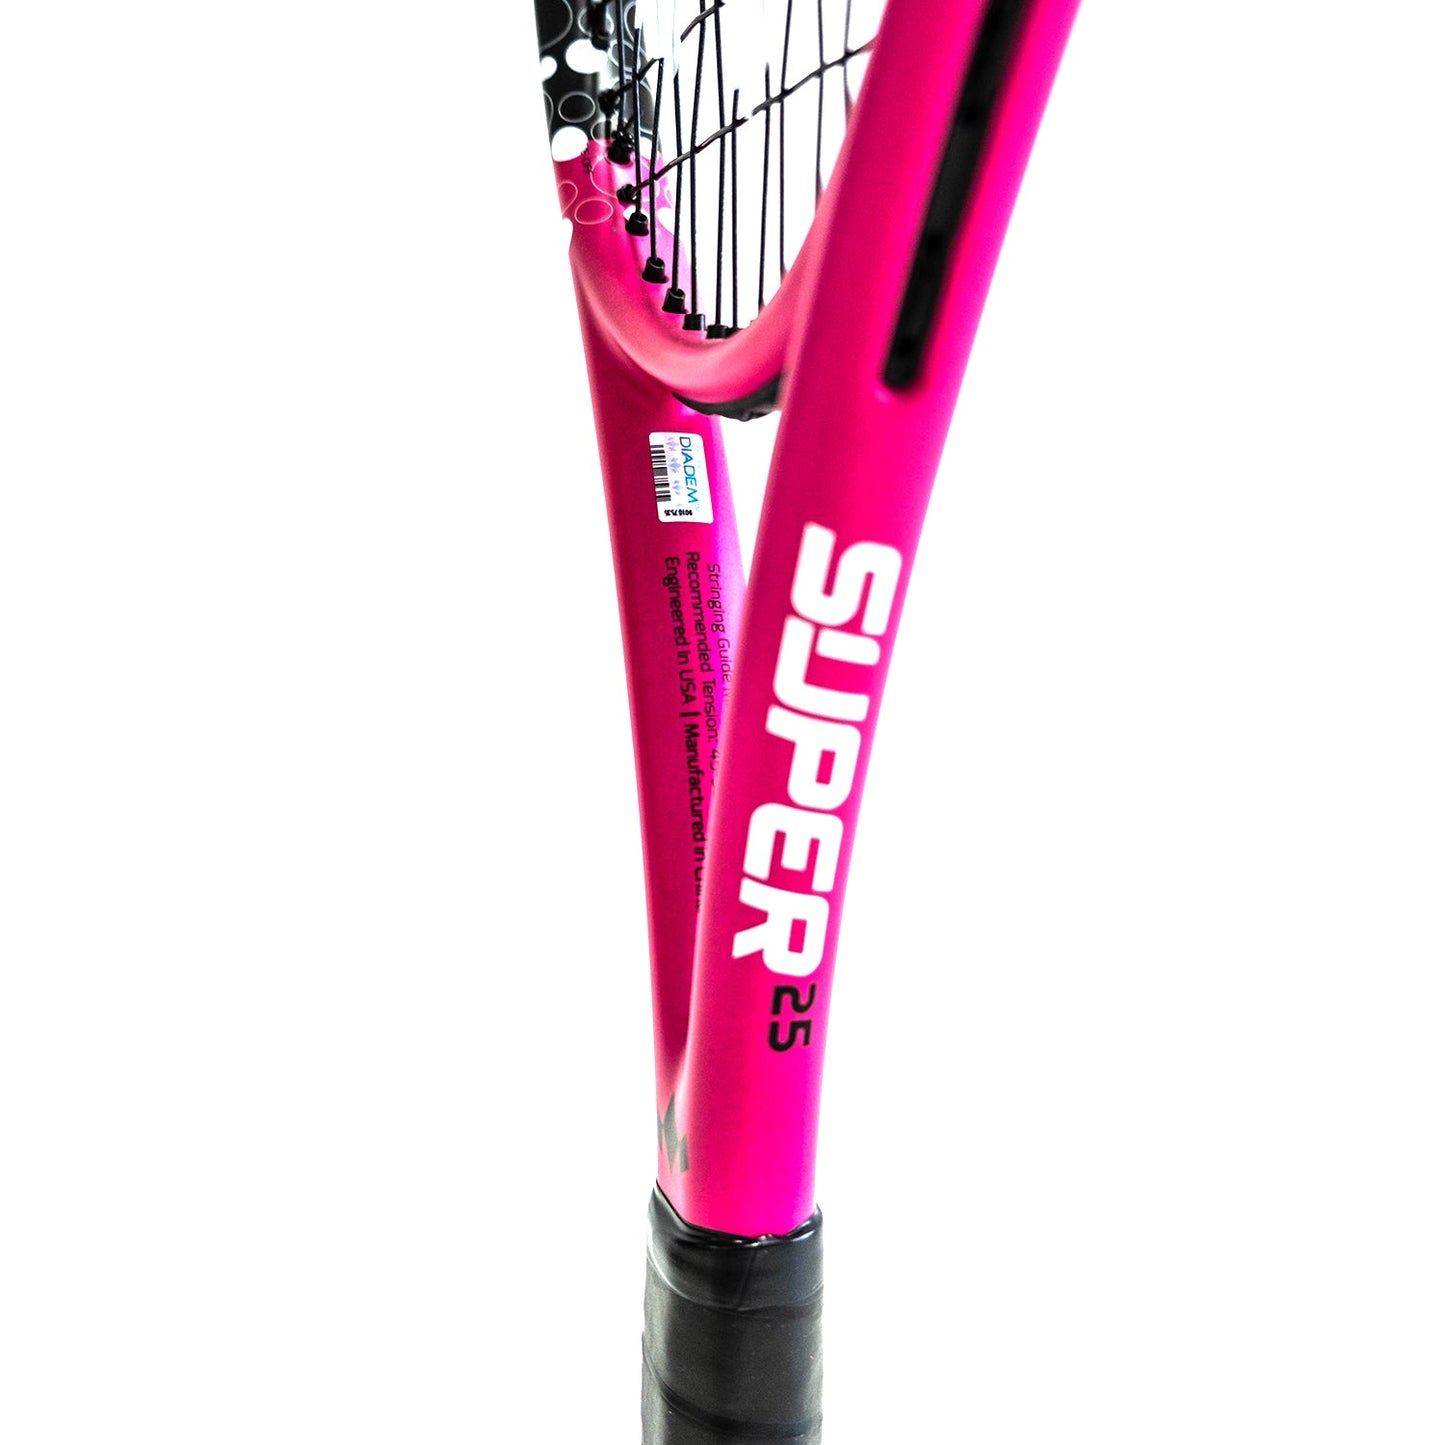 Diadem Super 25 Pink Junior Racket by Diadem Sports